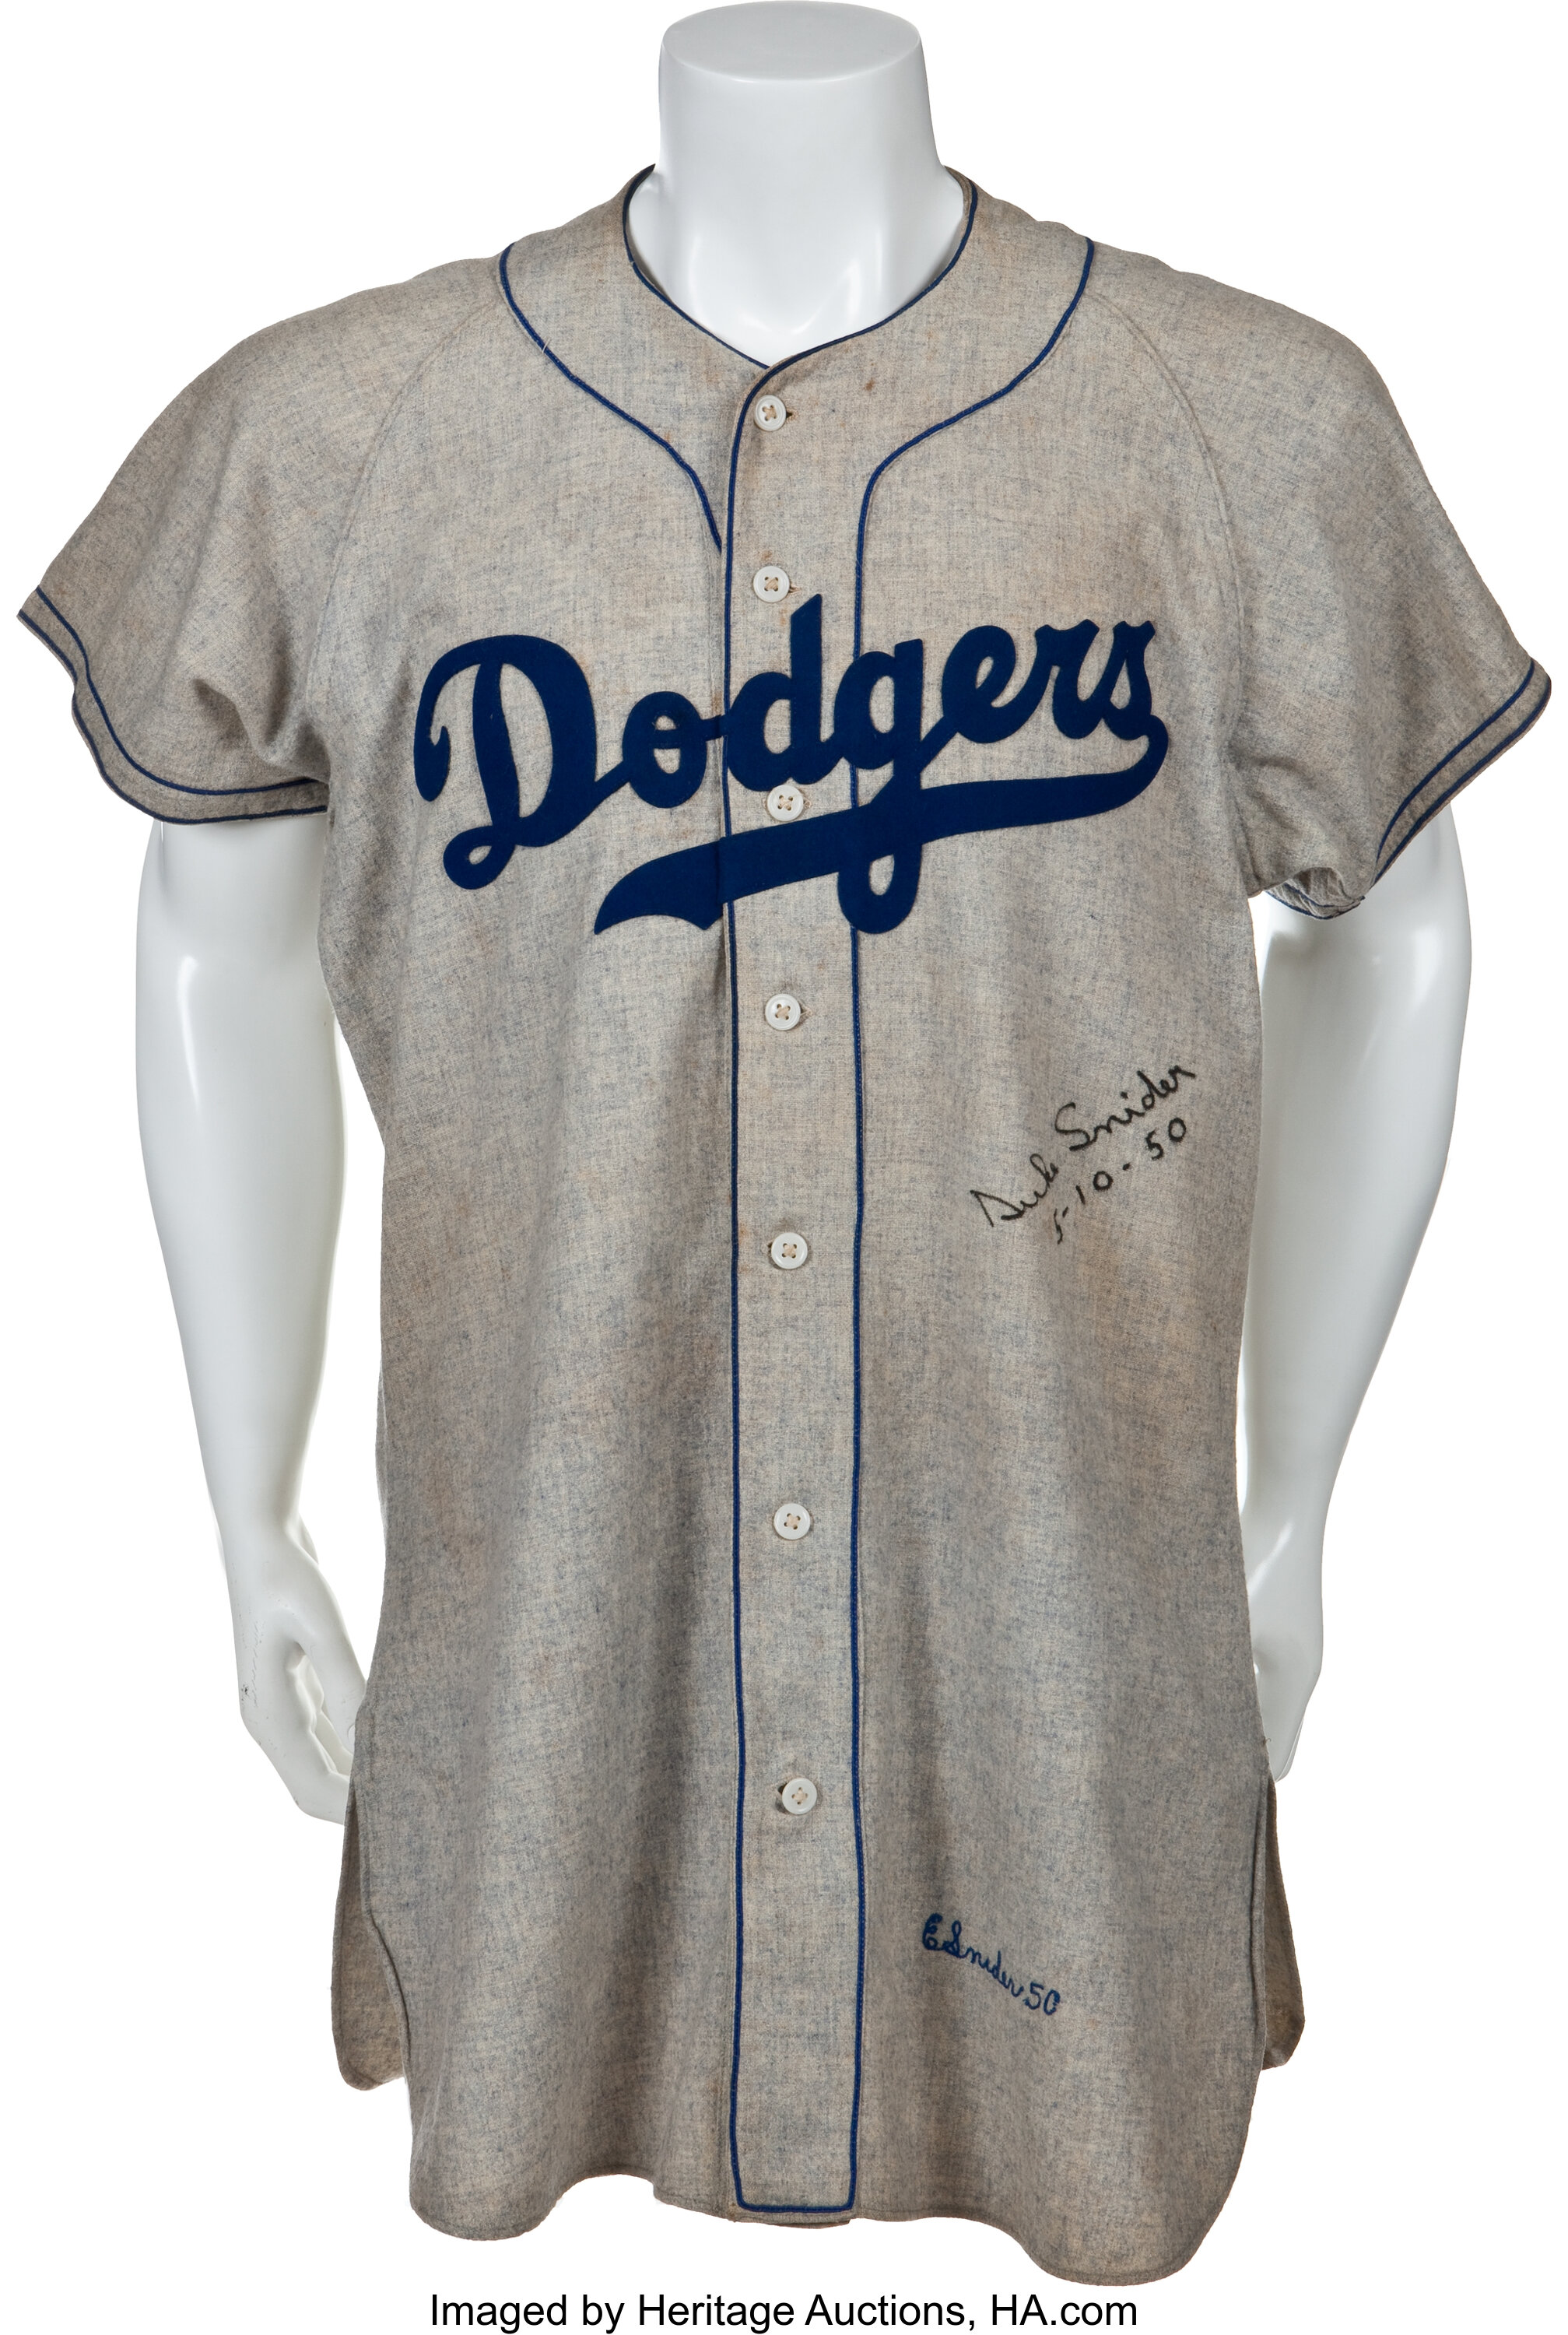 Duke Snider 1955 Brooklyn Dodgers Cooperstown Throwback Baseball Jersey